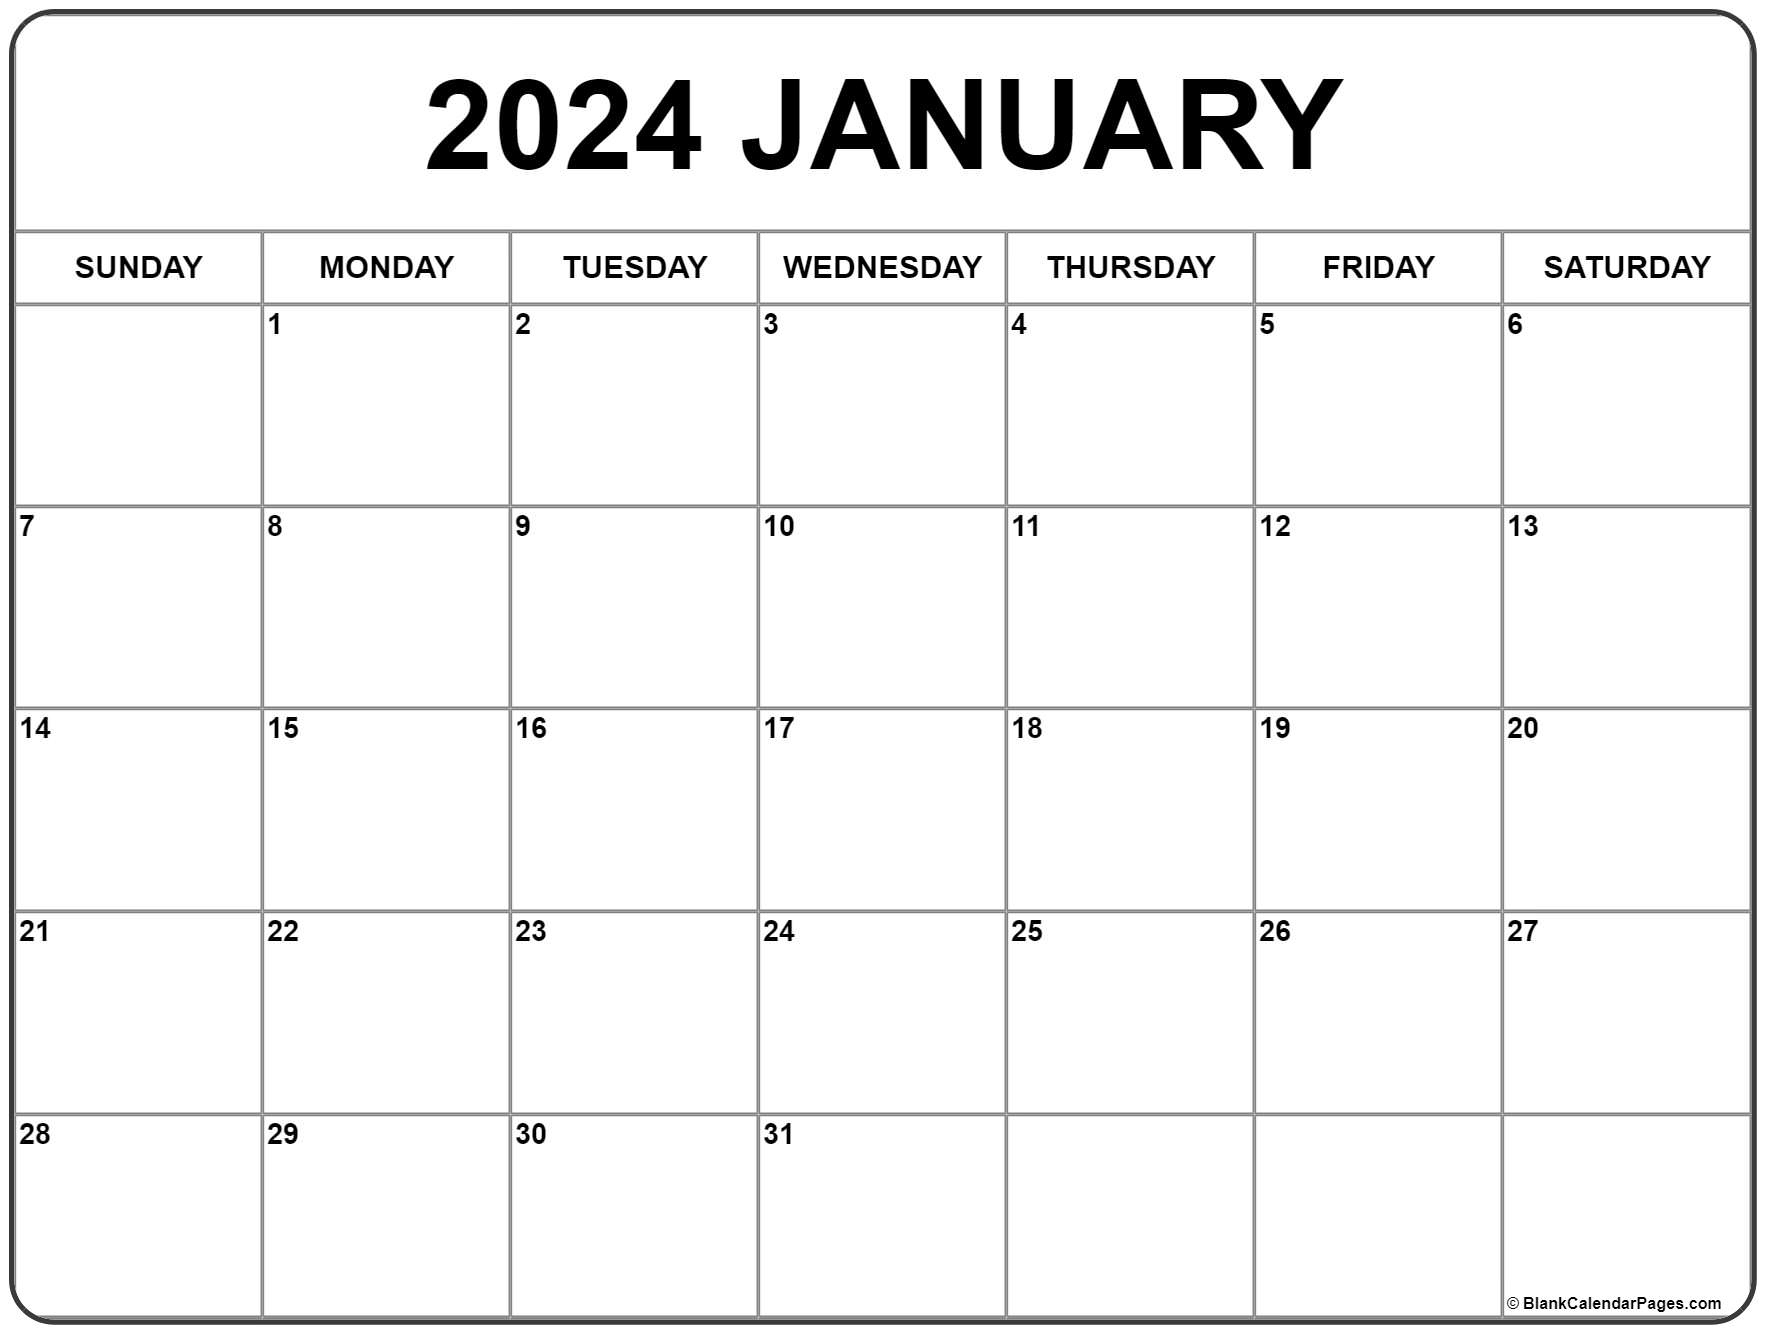 January 2024 Calendar | Free Printable Calendar | Printable Calendar 2024 Jan